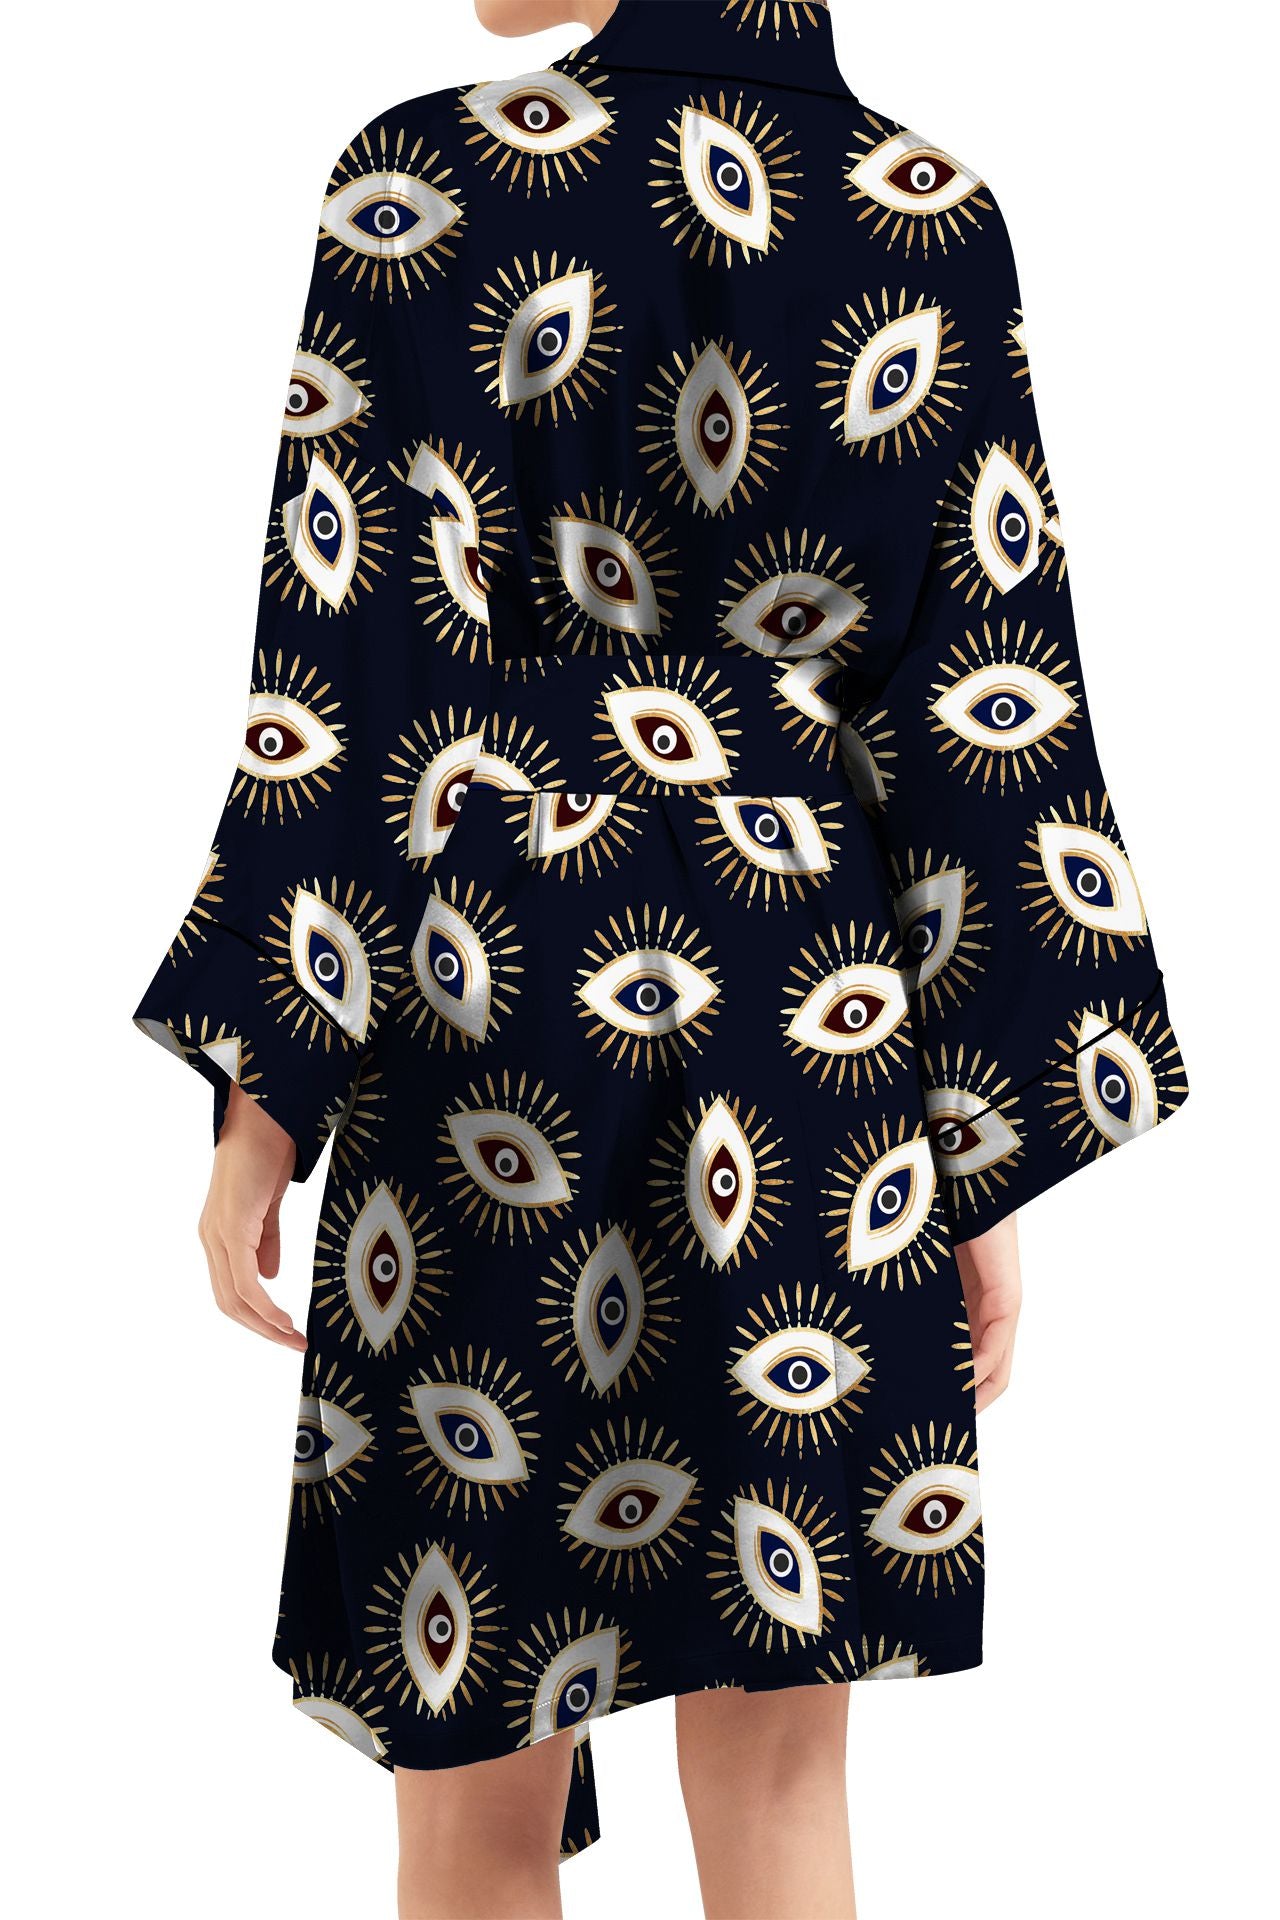 "short silk robe womens" "printed silk robe" "women's short kimono" "Kyle X Shahida"